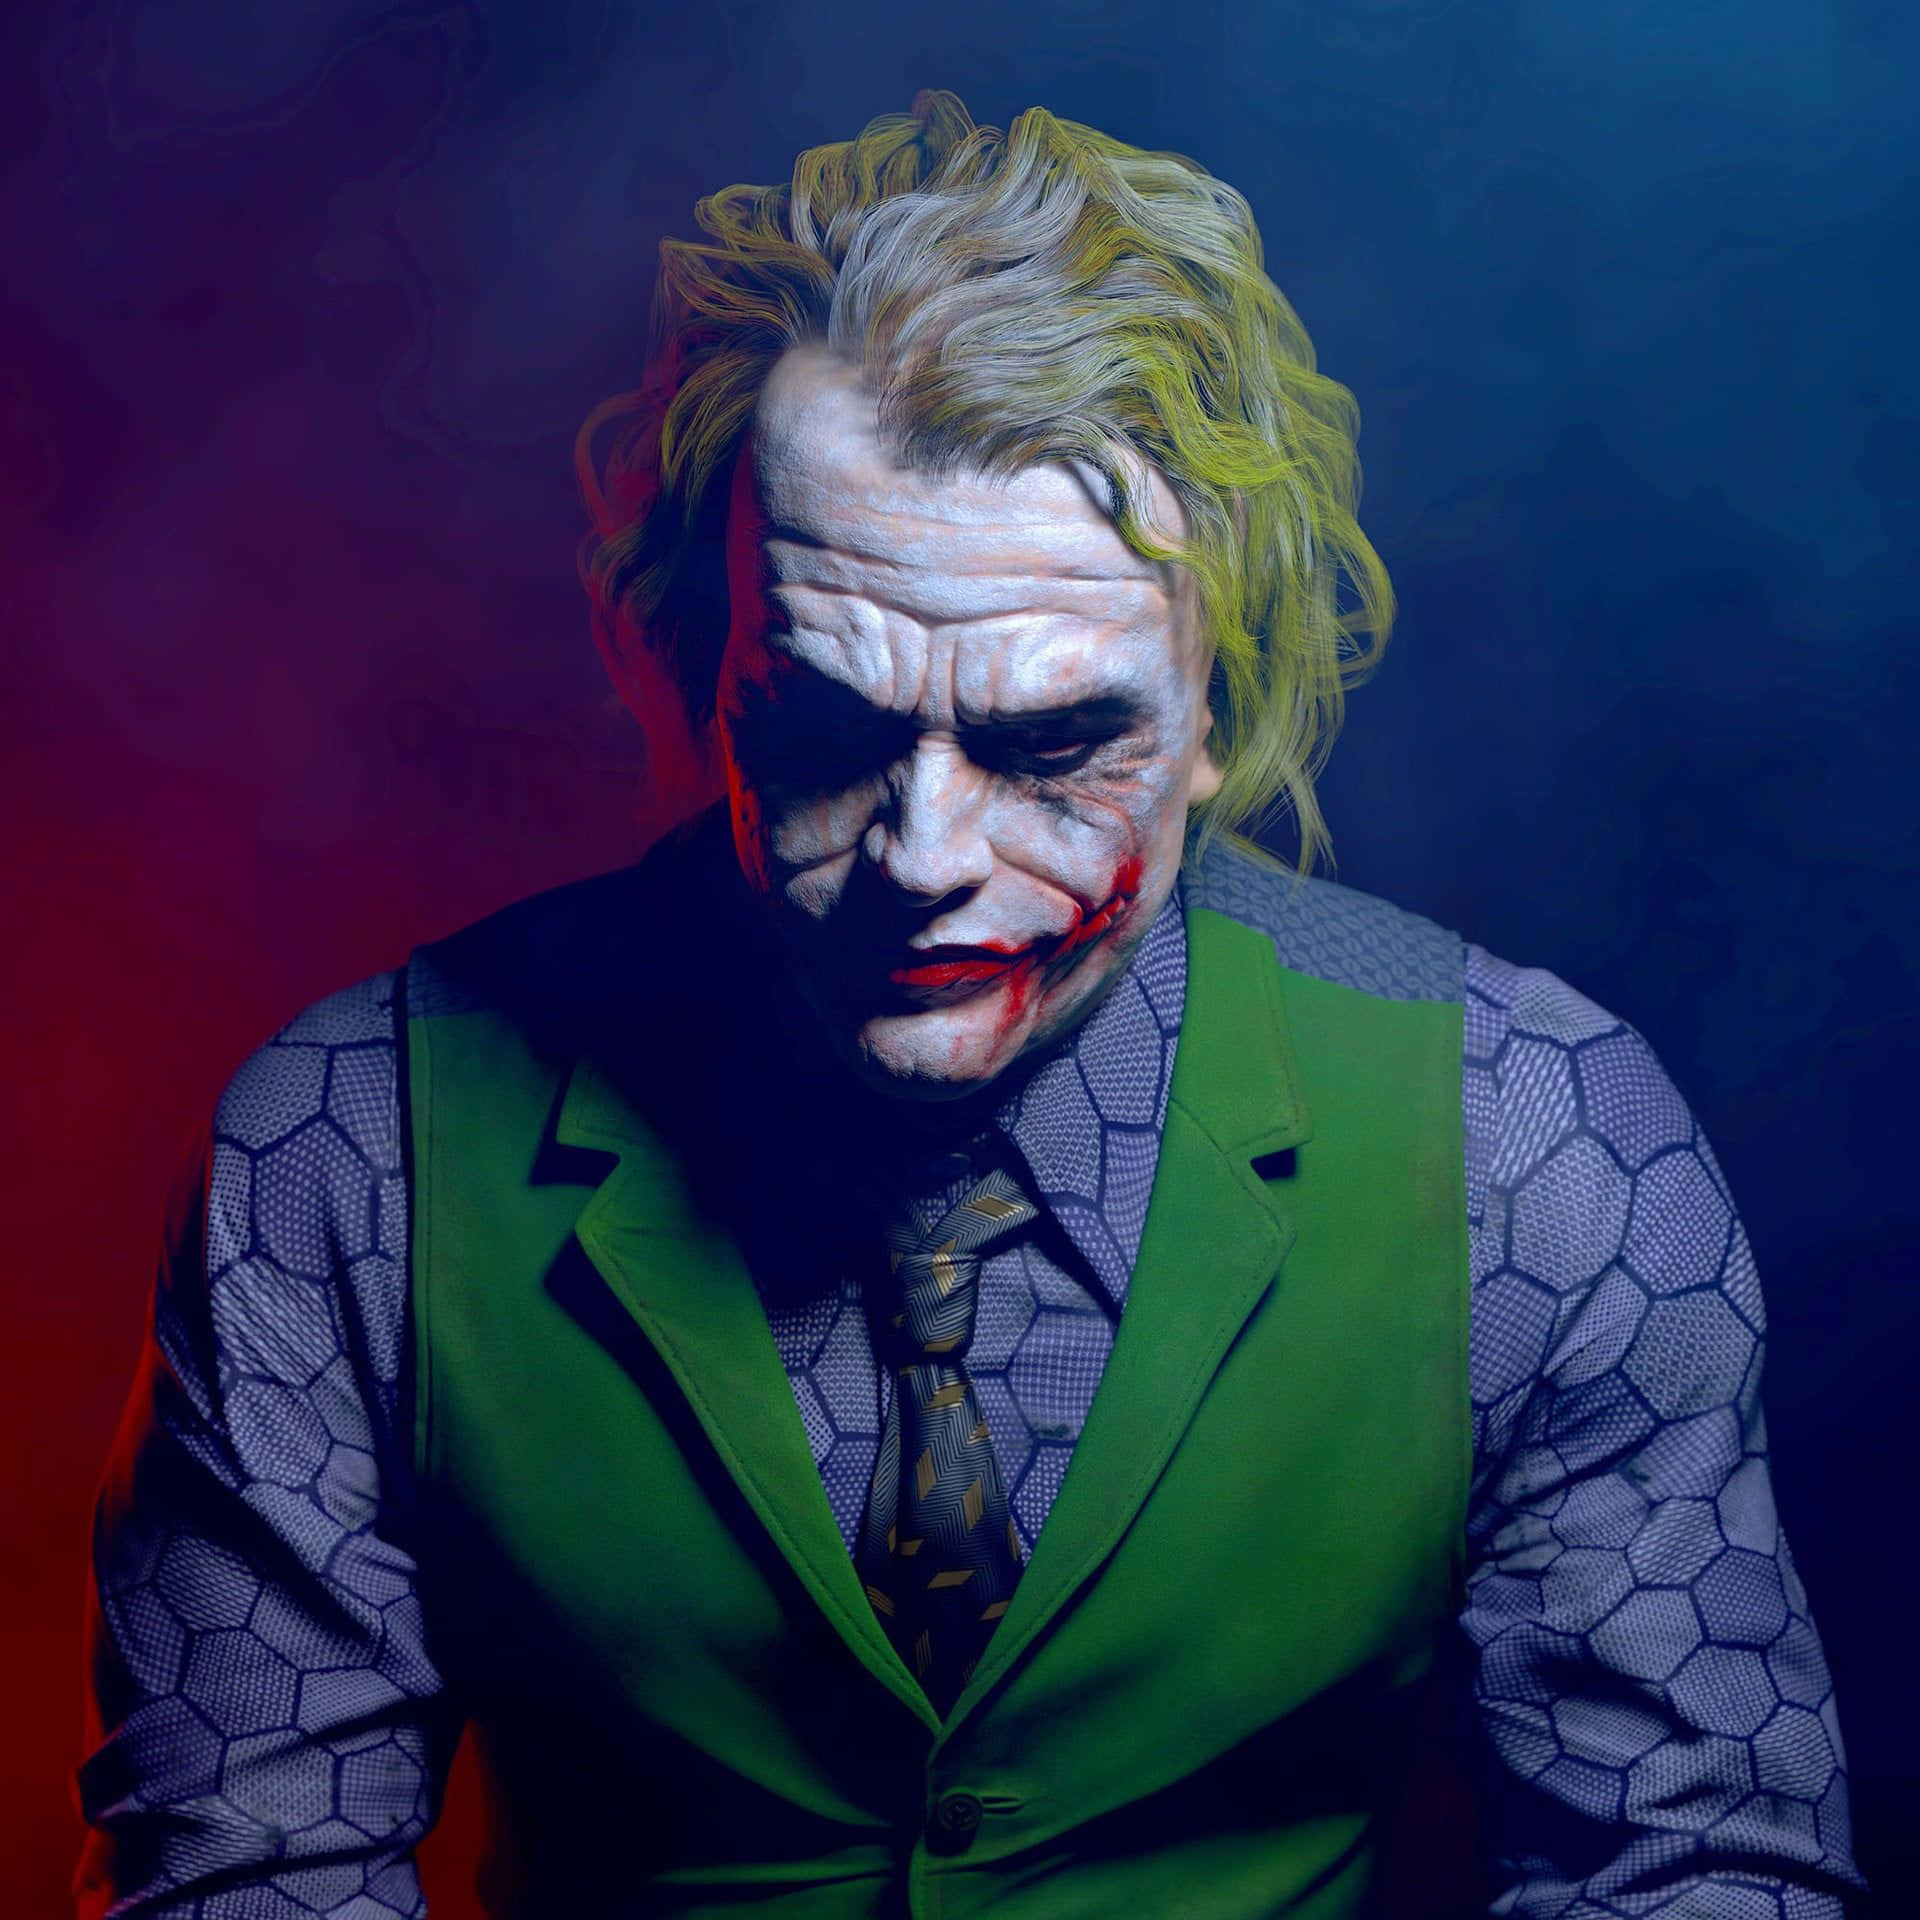 Combining laughter and terror - Joaquin Phoenix stars as The Joker Wallpaper